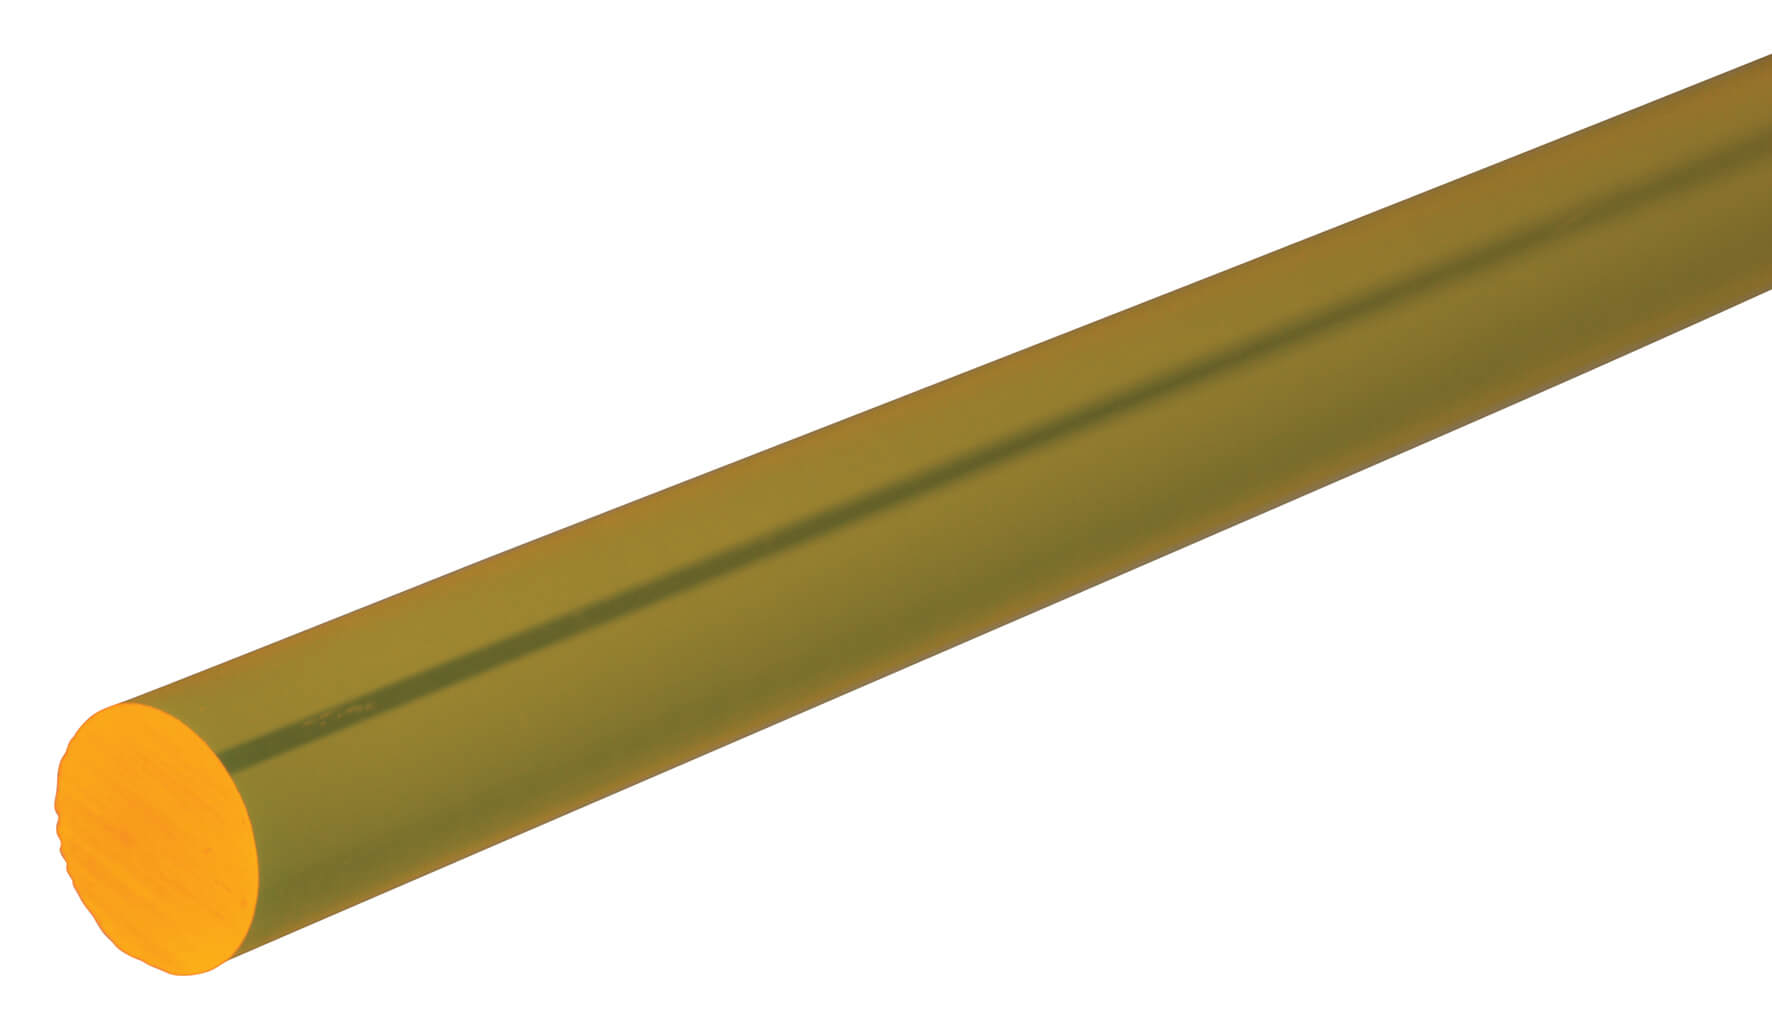 Fluorescent Acrylic Rod 10mm x 500mm - Yellow